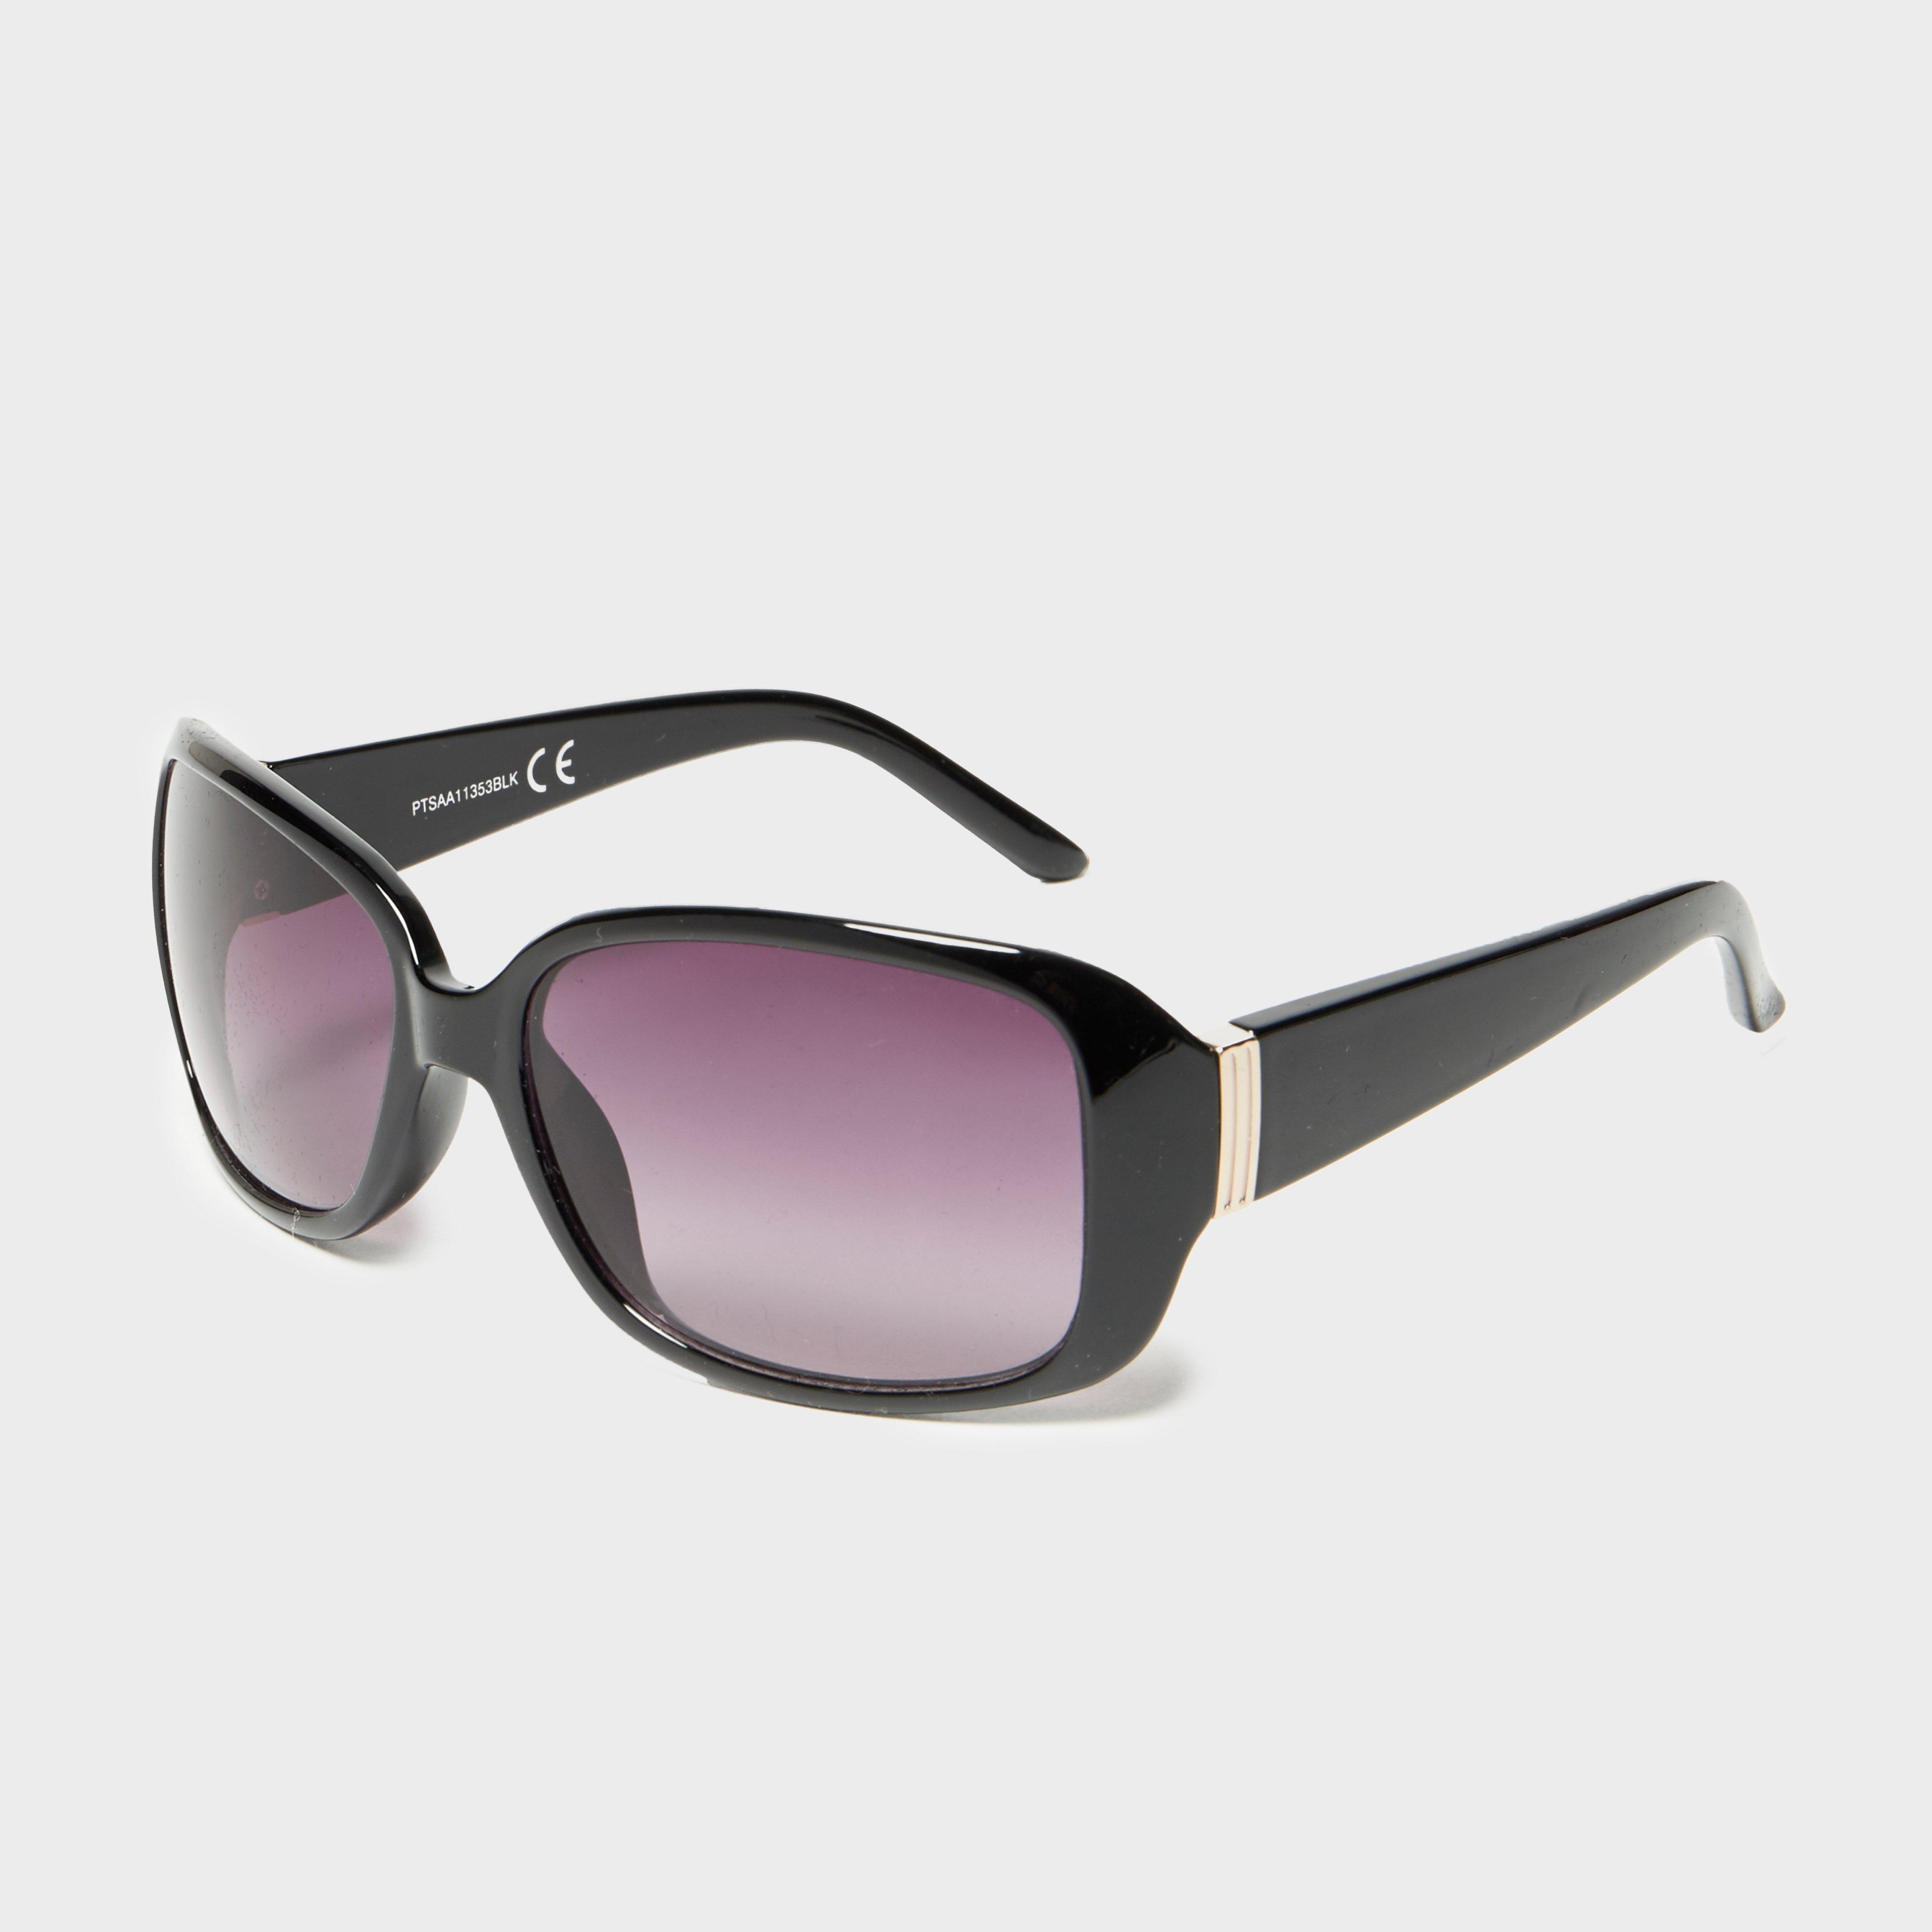 Peter Storm Womens Square Sunglasses  Black